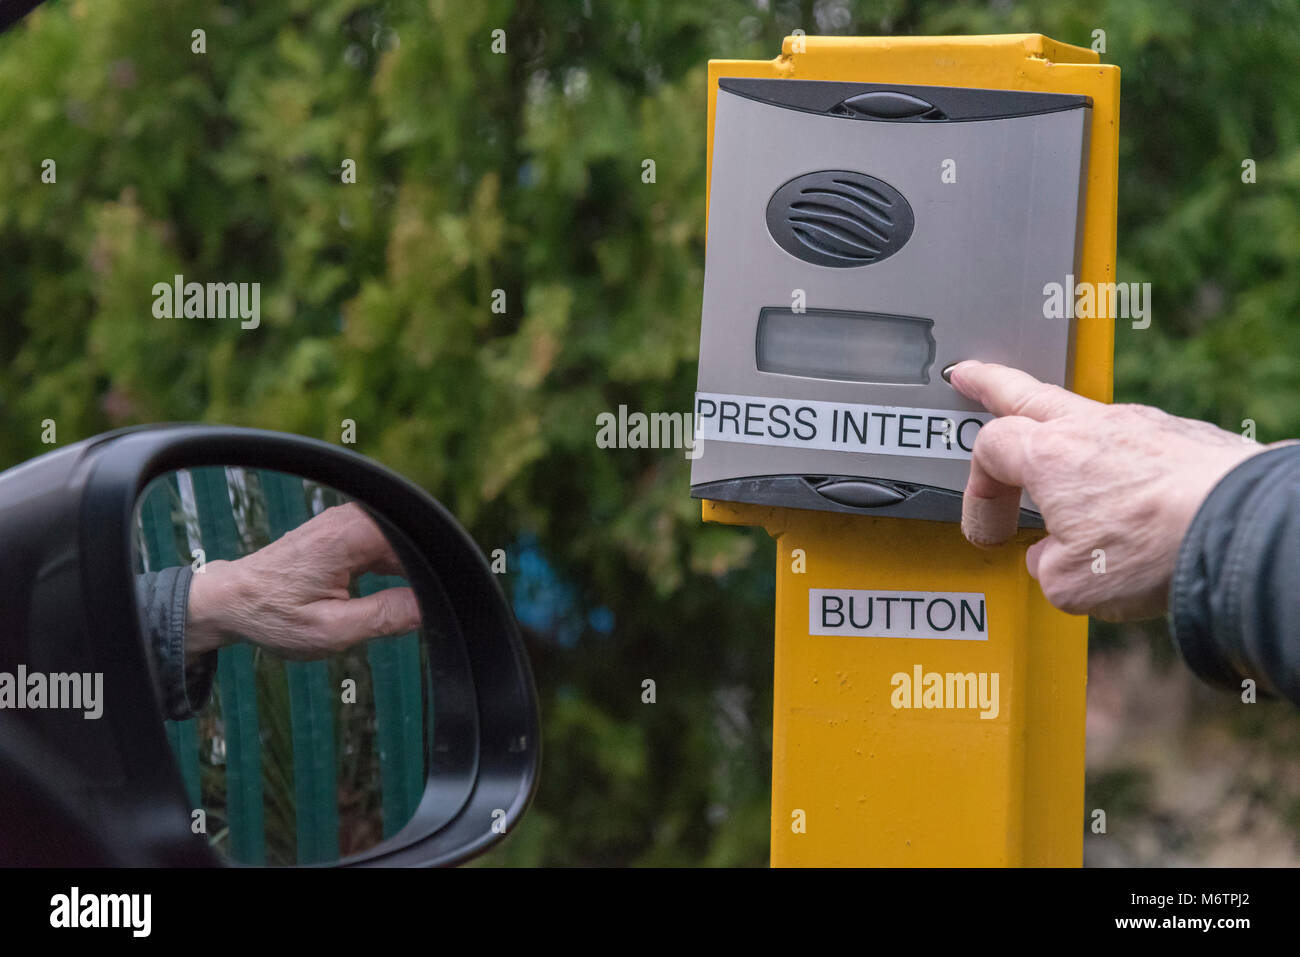 Hand pushing car park security intercom button Stock Photo